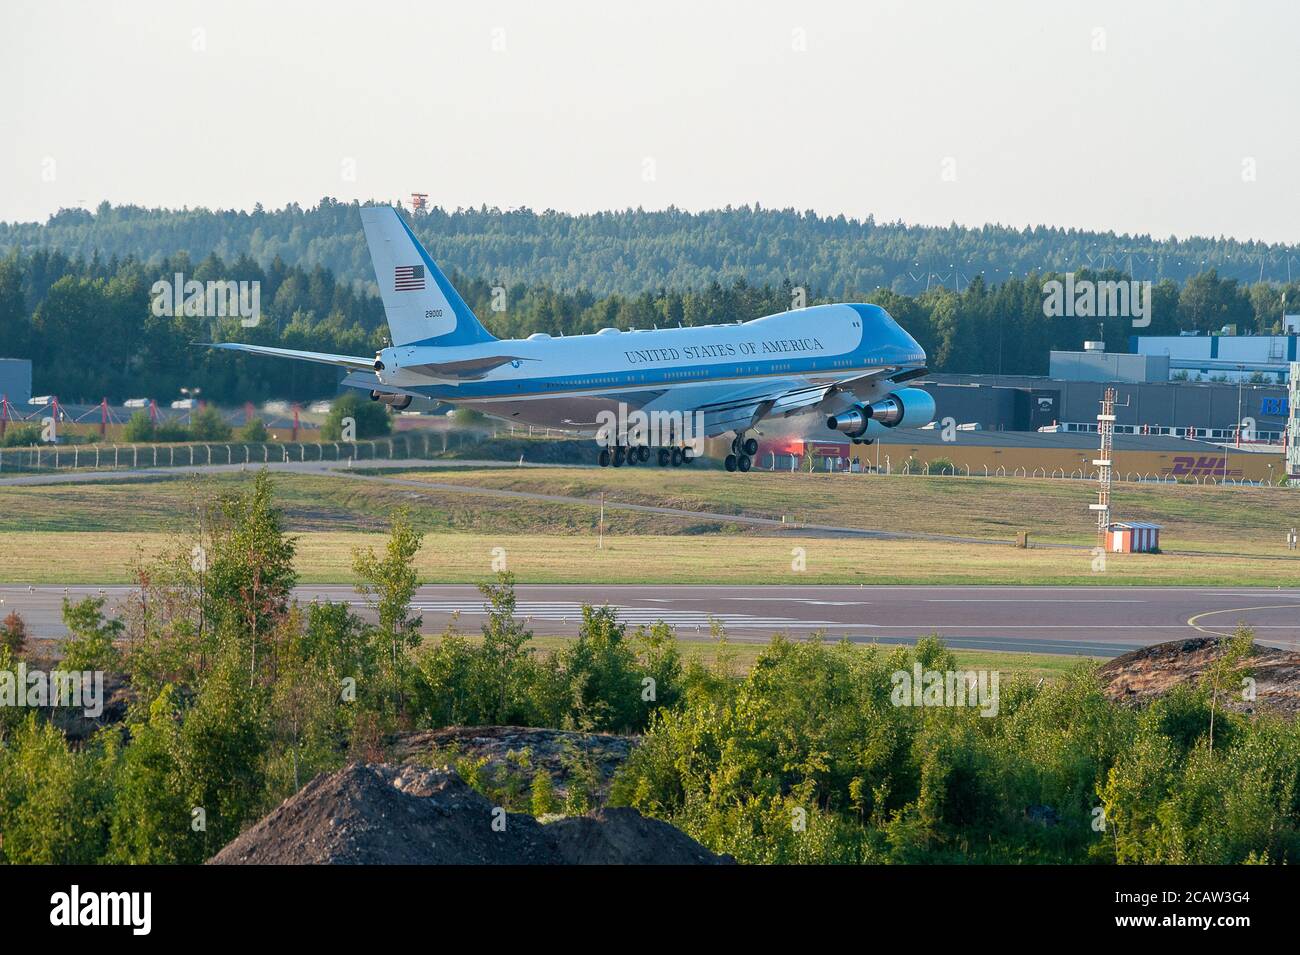 Helsinki / Finland - July 15, 2018: Donald Trump arrived in Helsinki Summit 2018 to meet Russian Federation president Vladimir Putin. Air Force One la Stock Photo